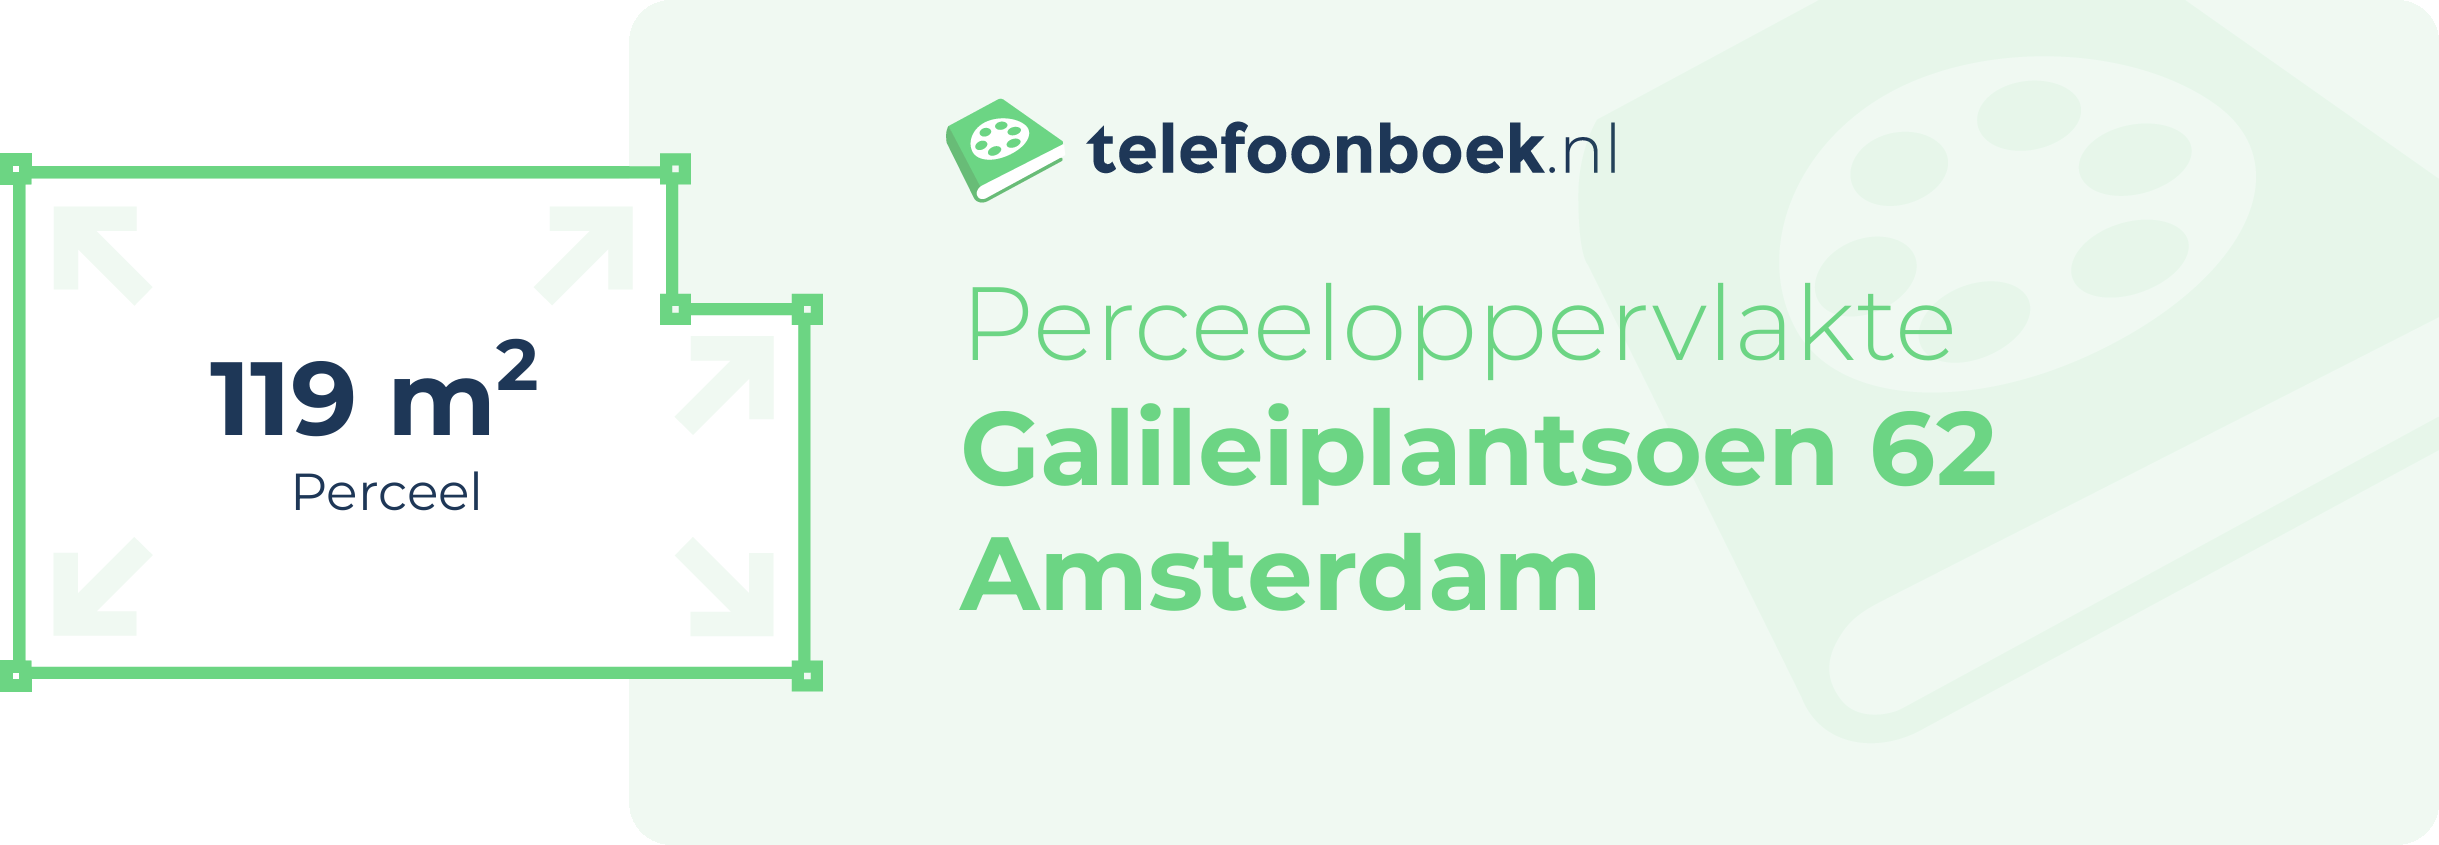 Perceeloppervlakte Galileiplantsoen 62 Amsterdam